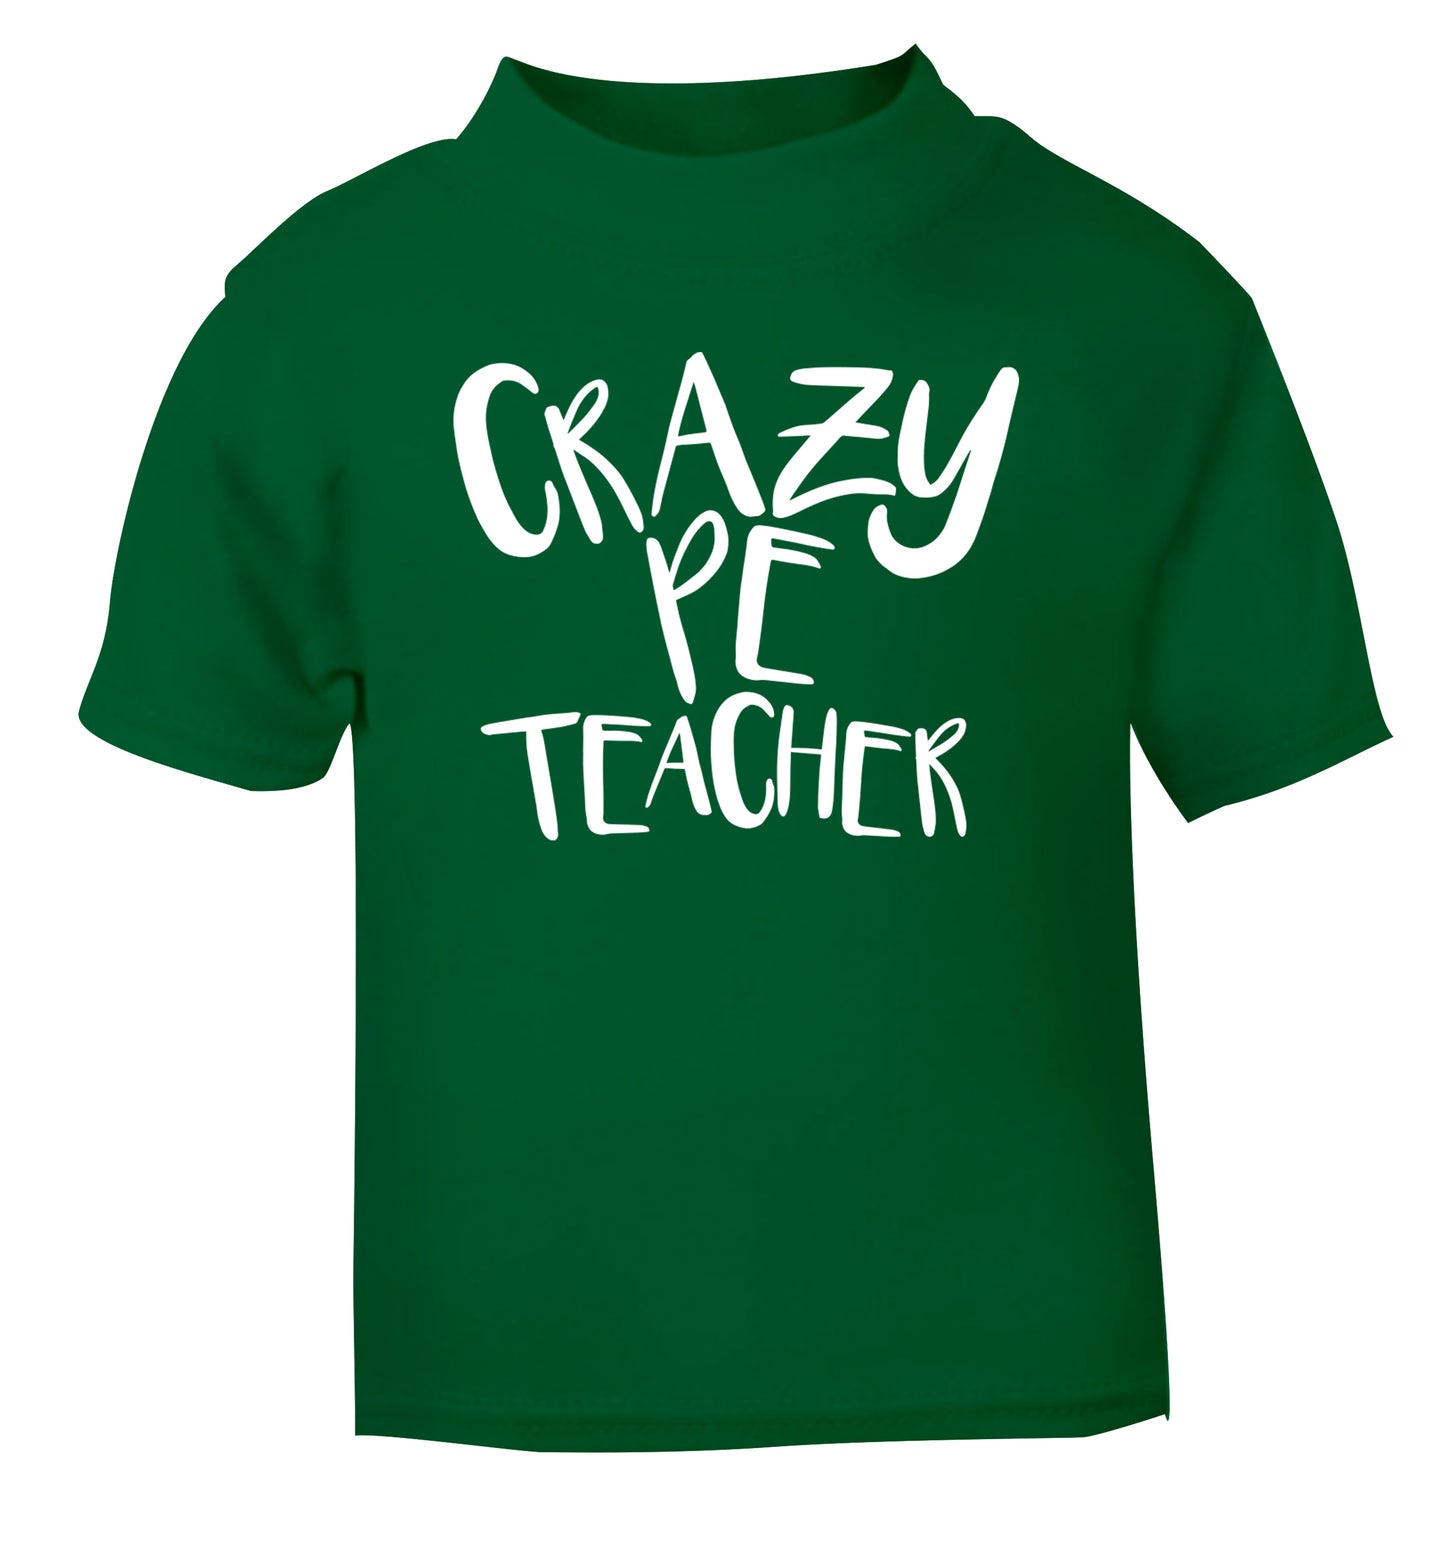 Crazy PE teacher green Baby Toddler Tshirt 2 Years